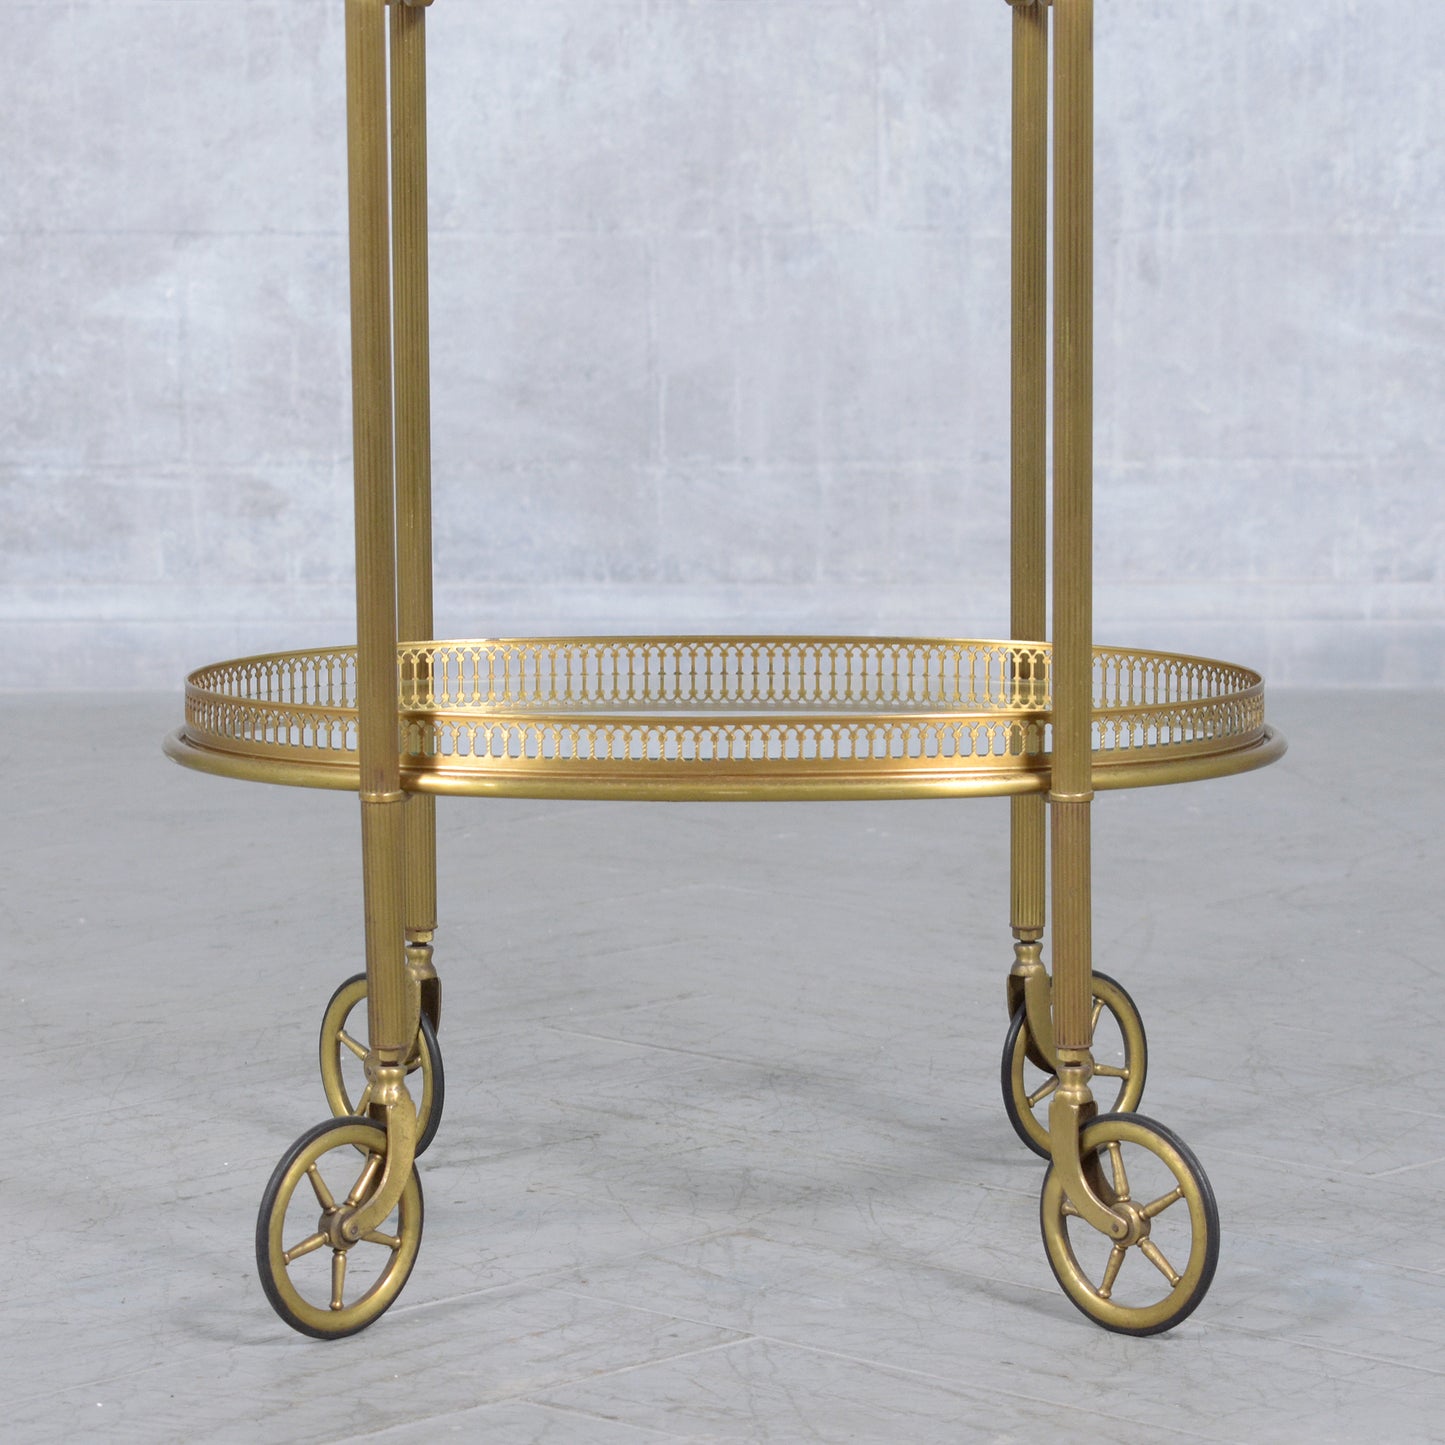 1960s Mid-Century Brass Bar Cart: Vintage Elegance on Wheels